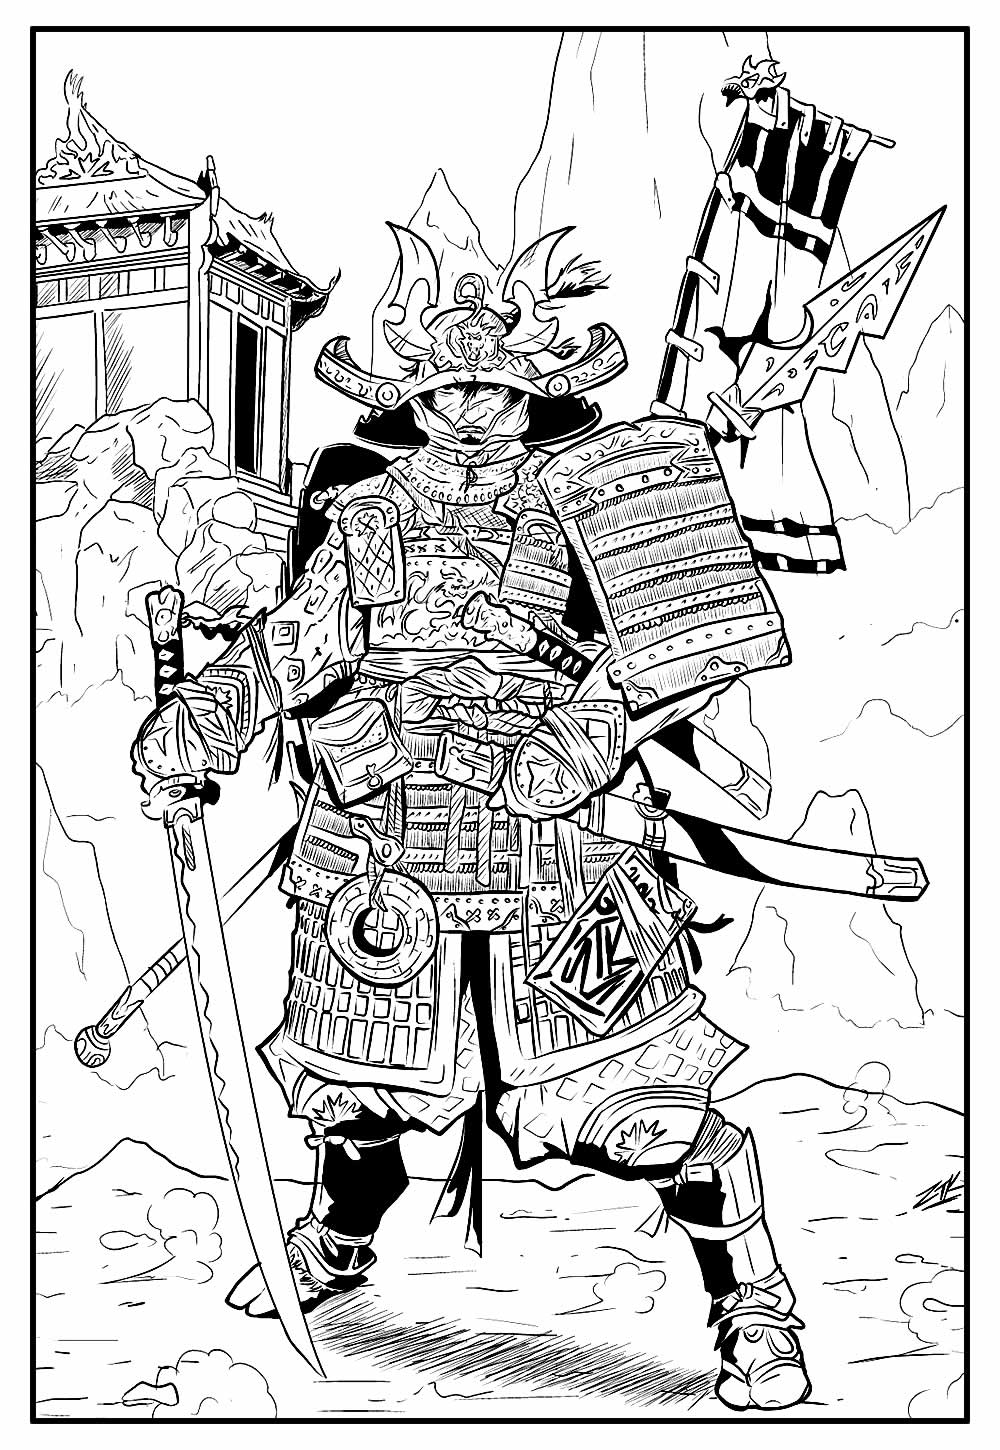 Desenho de Samurai adulto para Colorir - Colorir.com